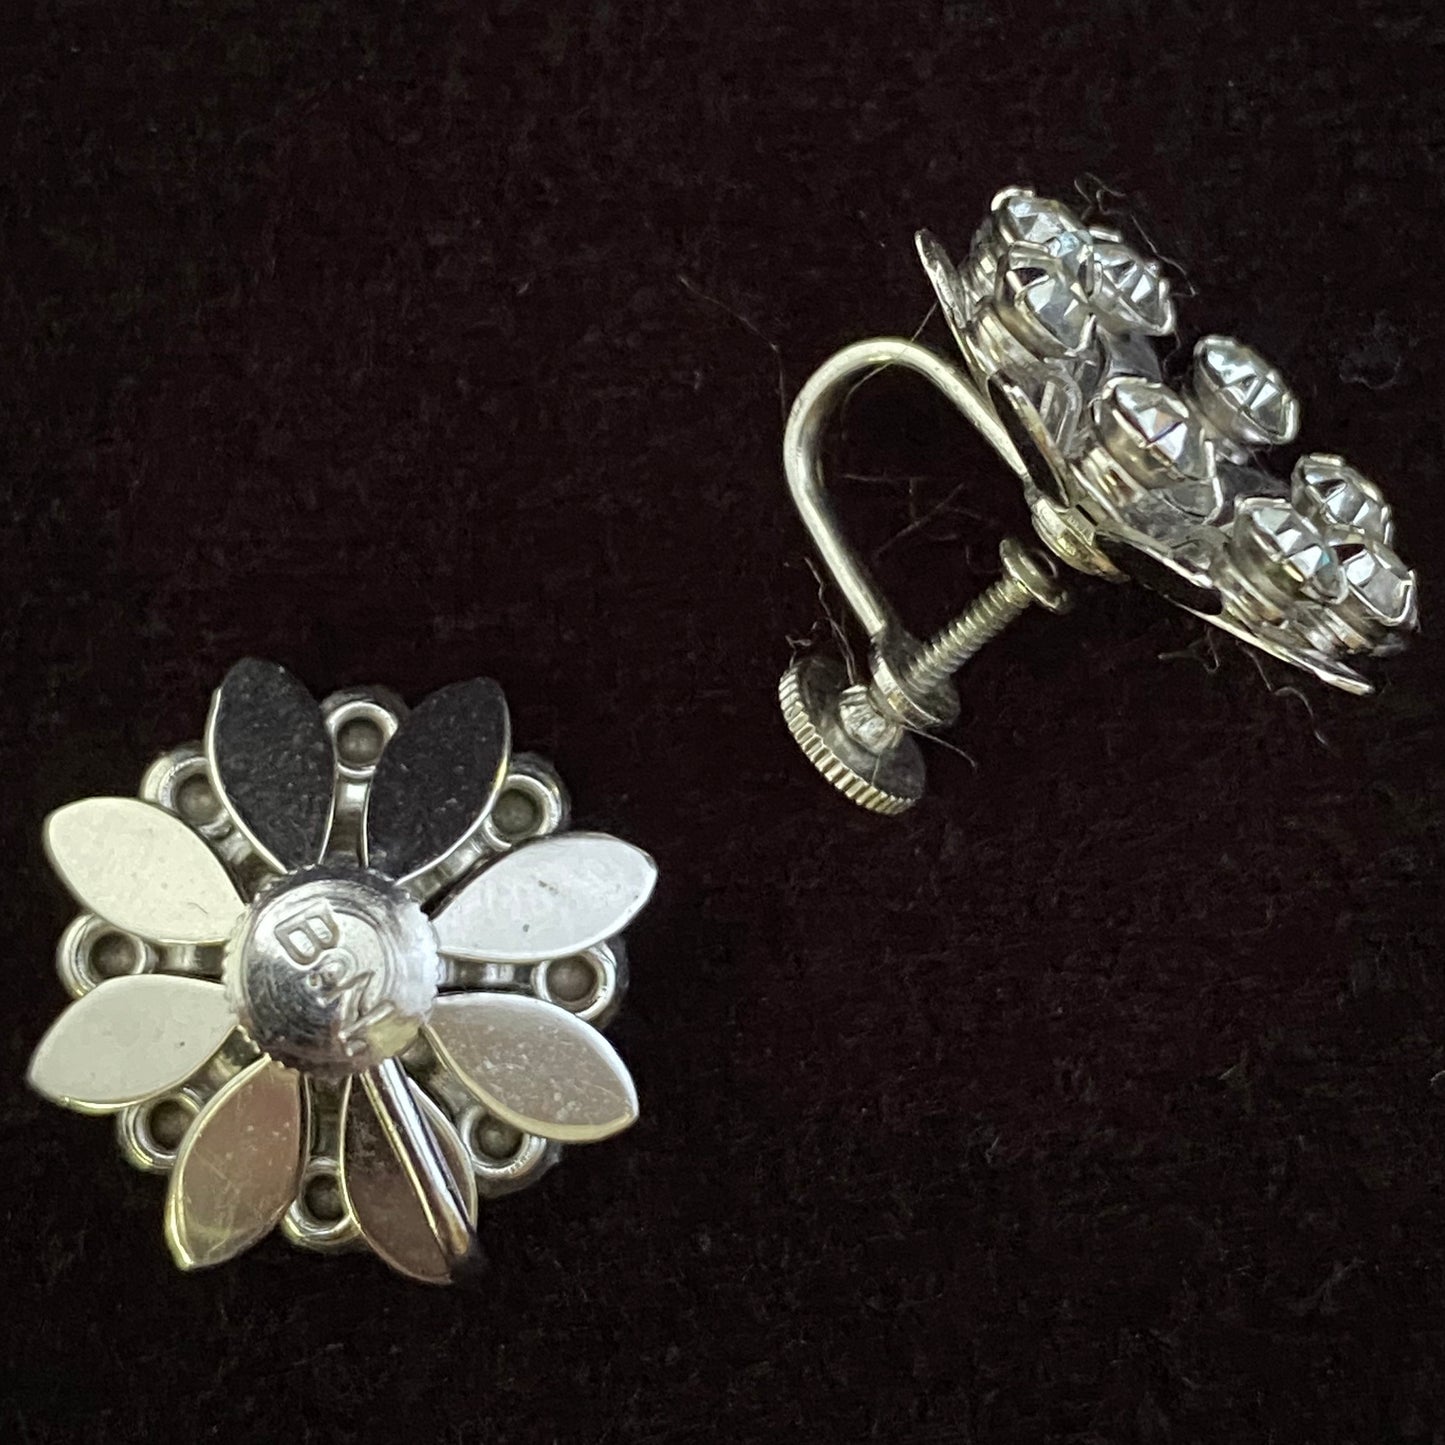 1950s Bugbee & Niles (B.N) Rhinestone Earrings - Retro Kandy Vintage